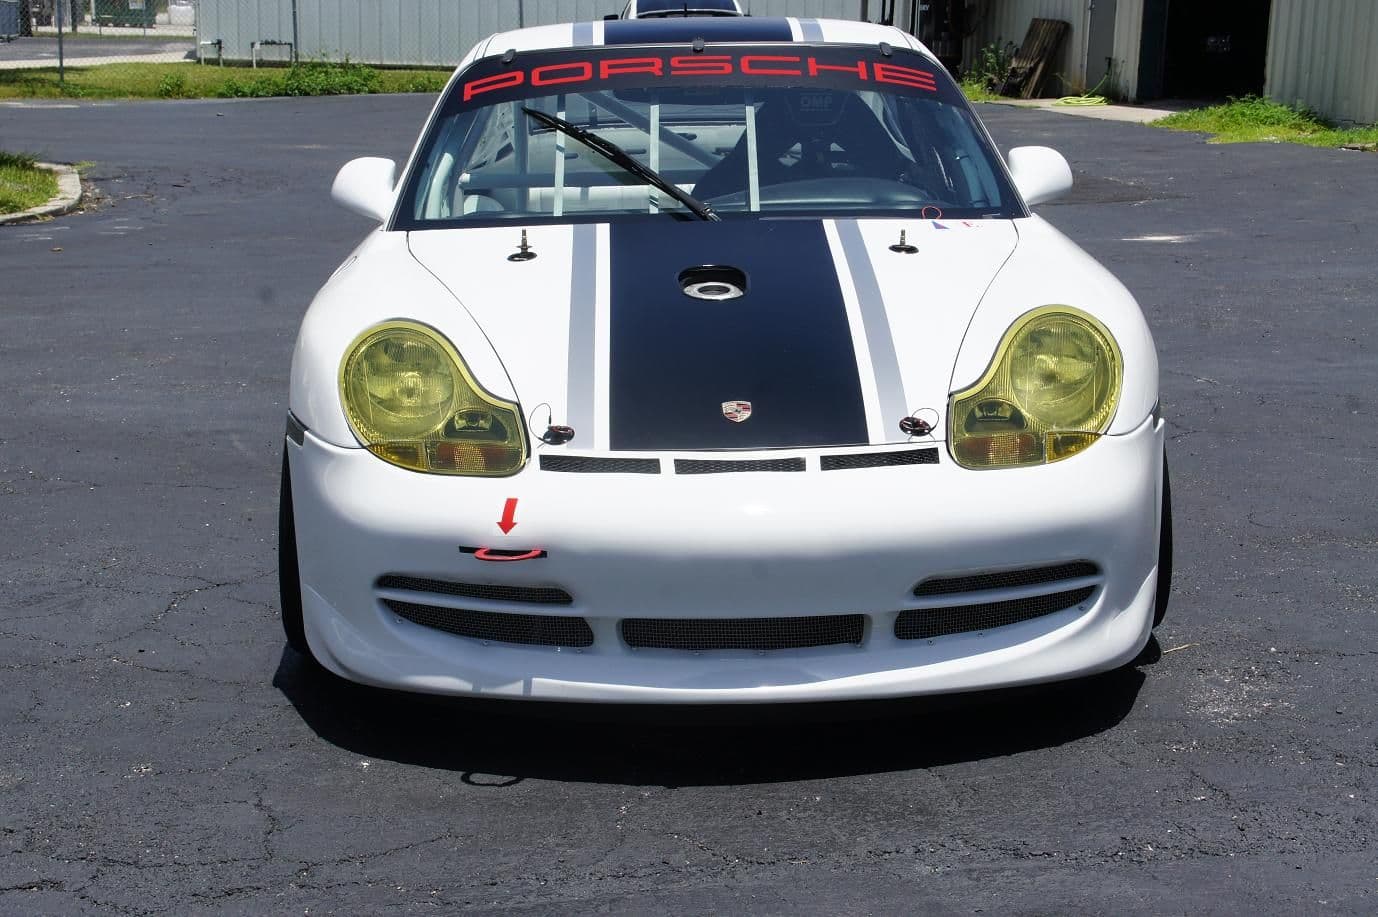 2001 Porsche GT3 - 2001 996 GT3 Cup fully restored - Used - VIN 12345678901234567 - Daytona Beach, FL 32117, United States